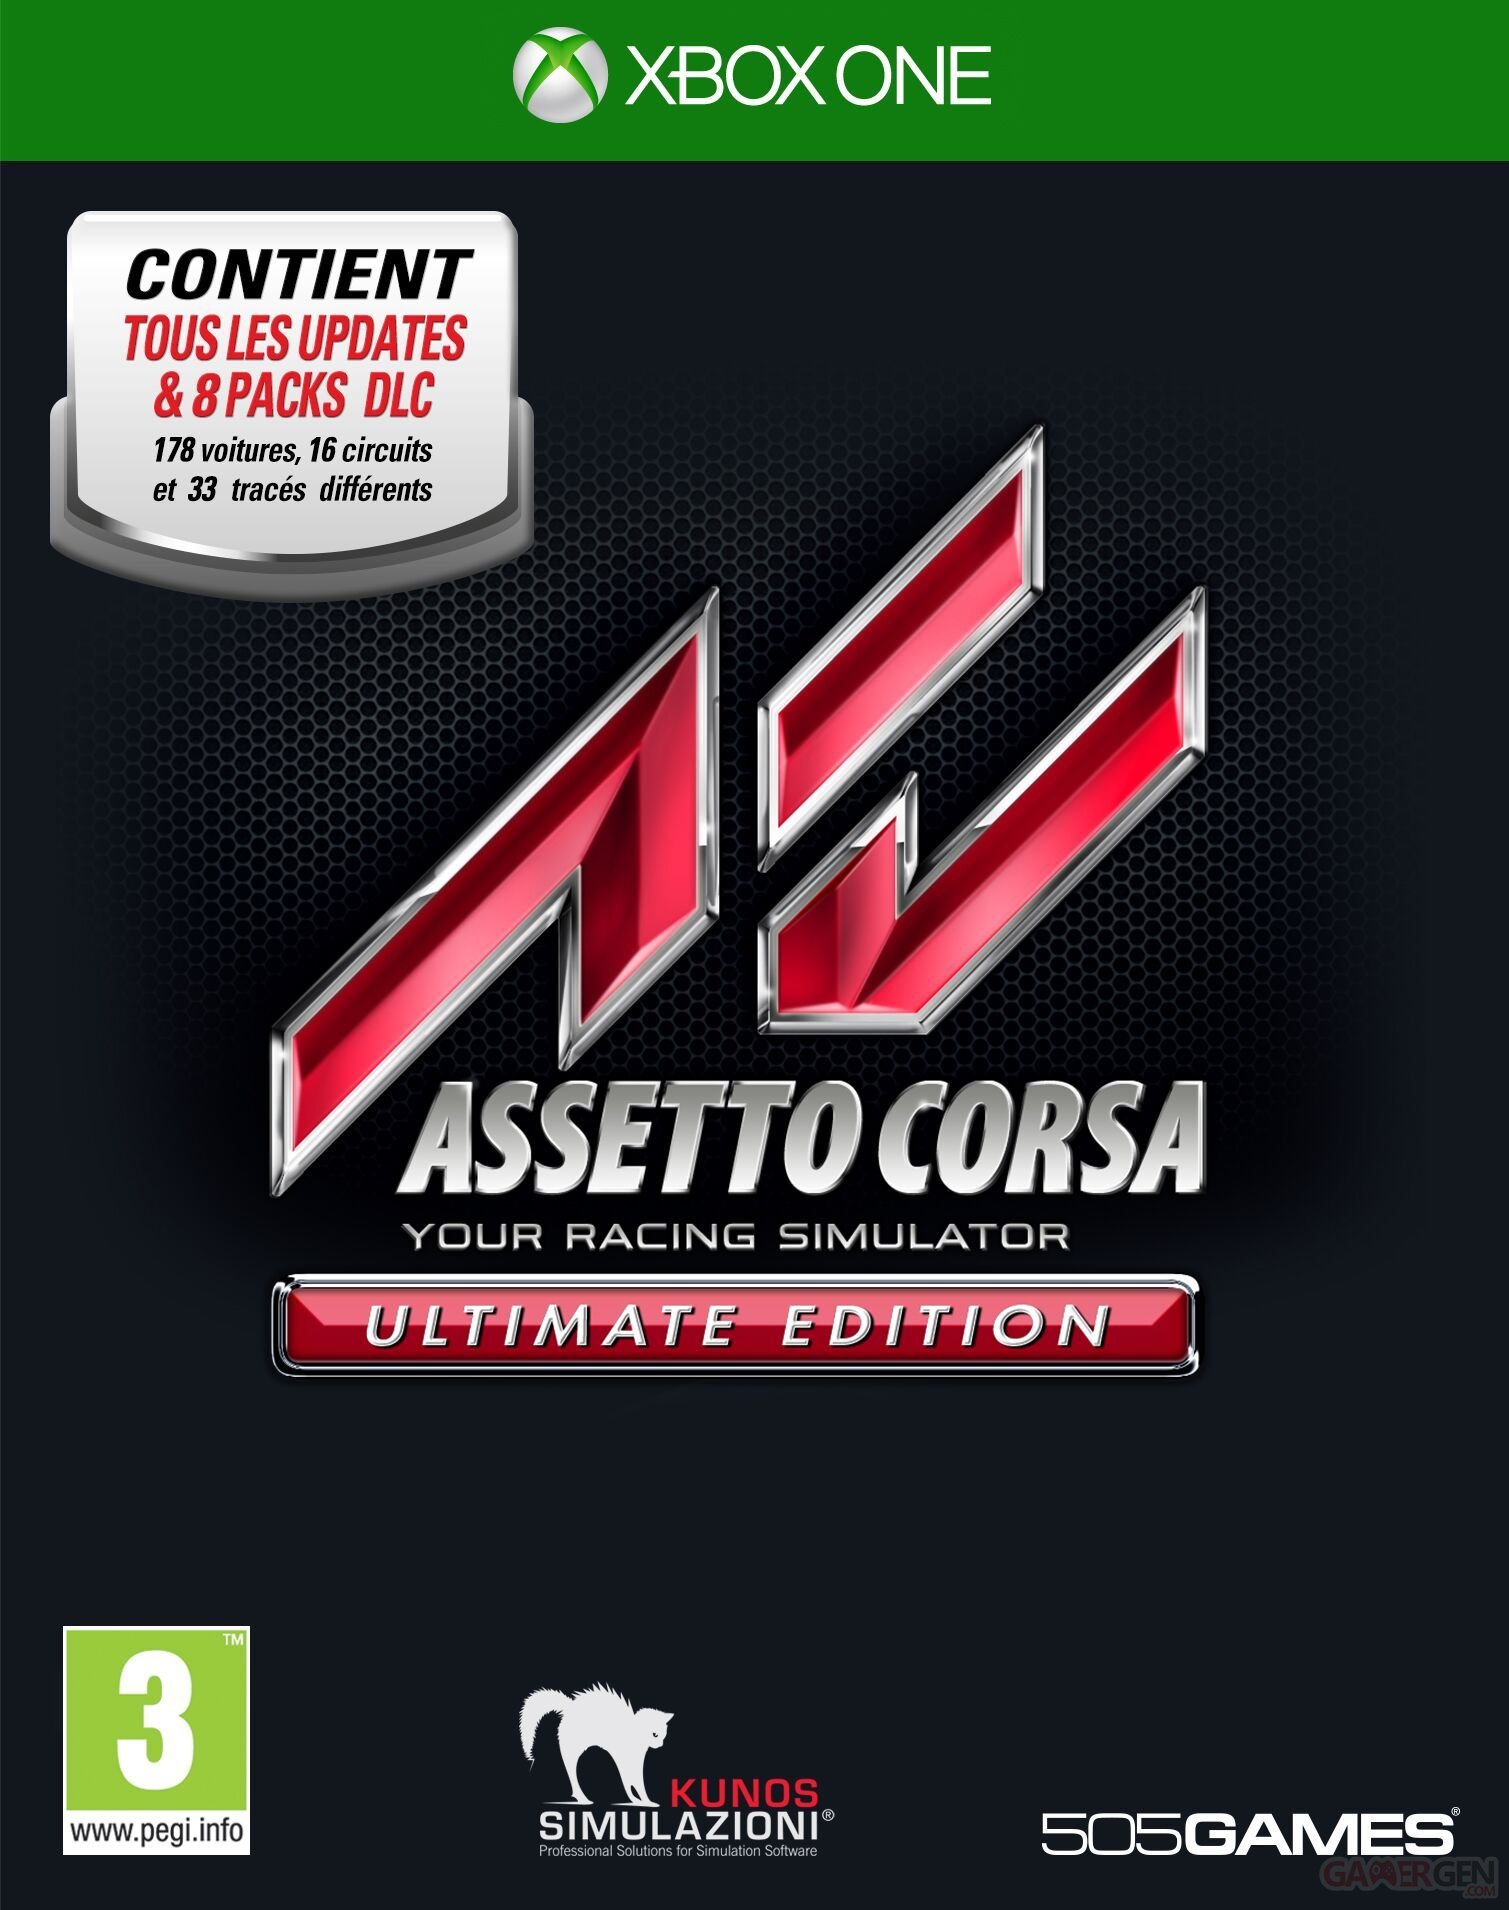 Assetto corsa ultimate edition. Corsa Ultimate Edition. Асетто Корса ультимейт эдишн. Assetto Corsa Ultimate Edition обложка. Ассето Корса на хвох оне диск.